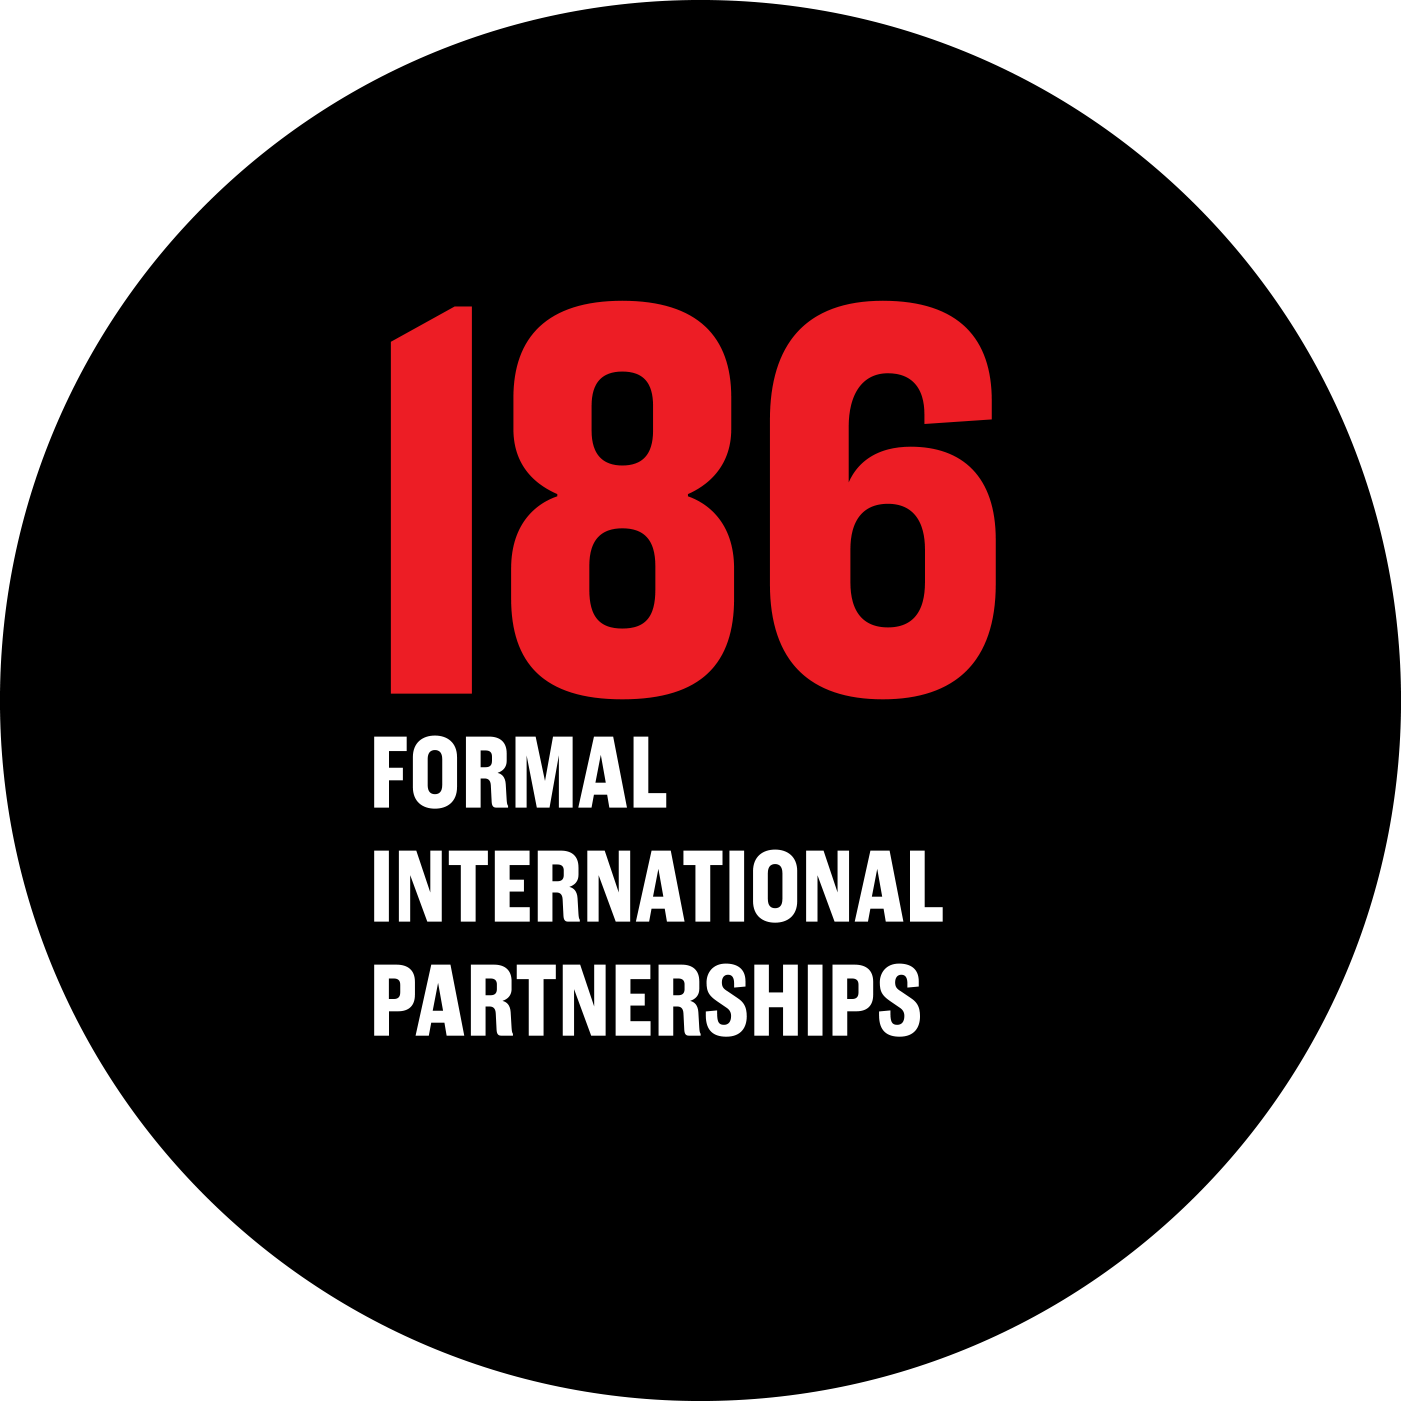 186 formal international partnerships